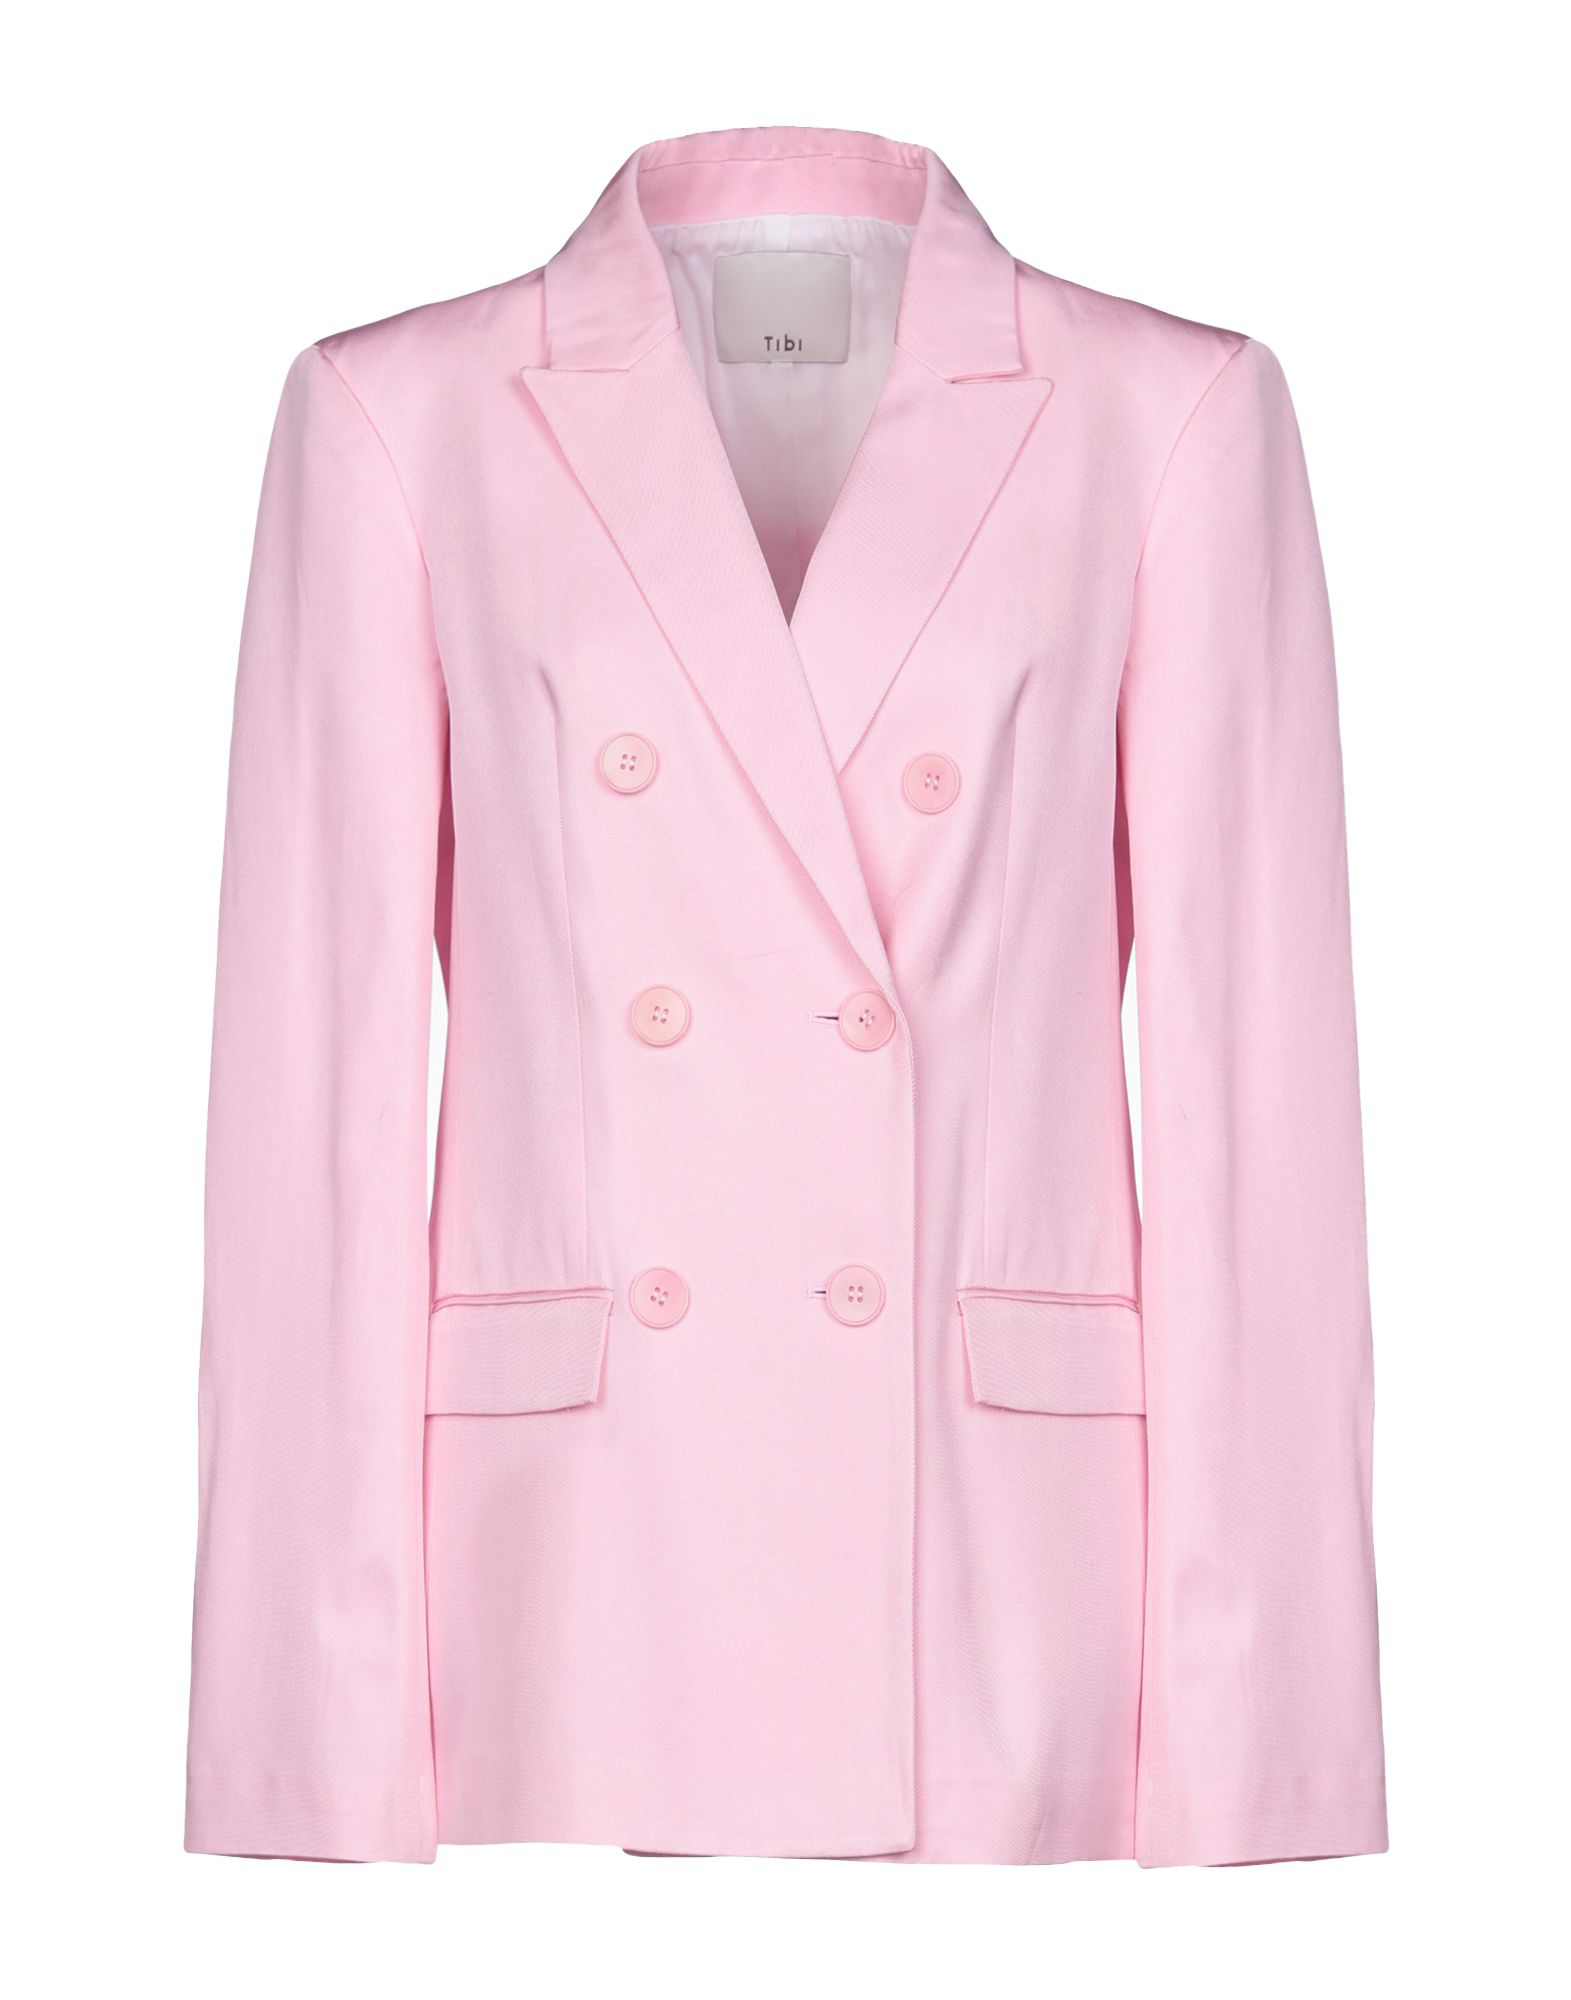 Tibi Sartorial Jacket In Pink | ModeSens